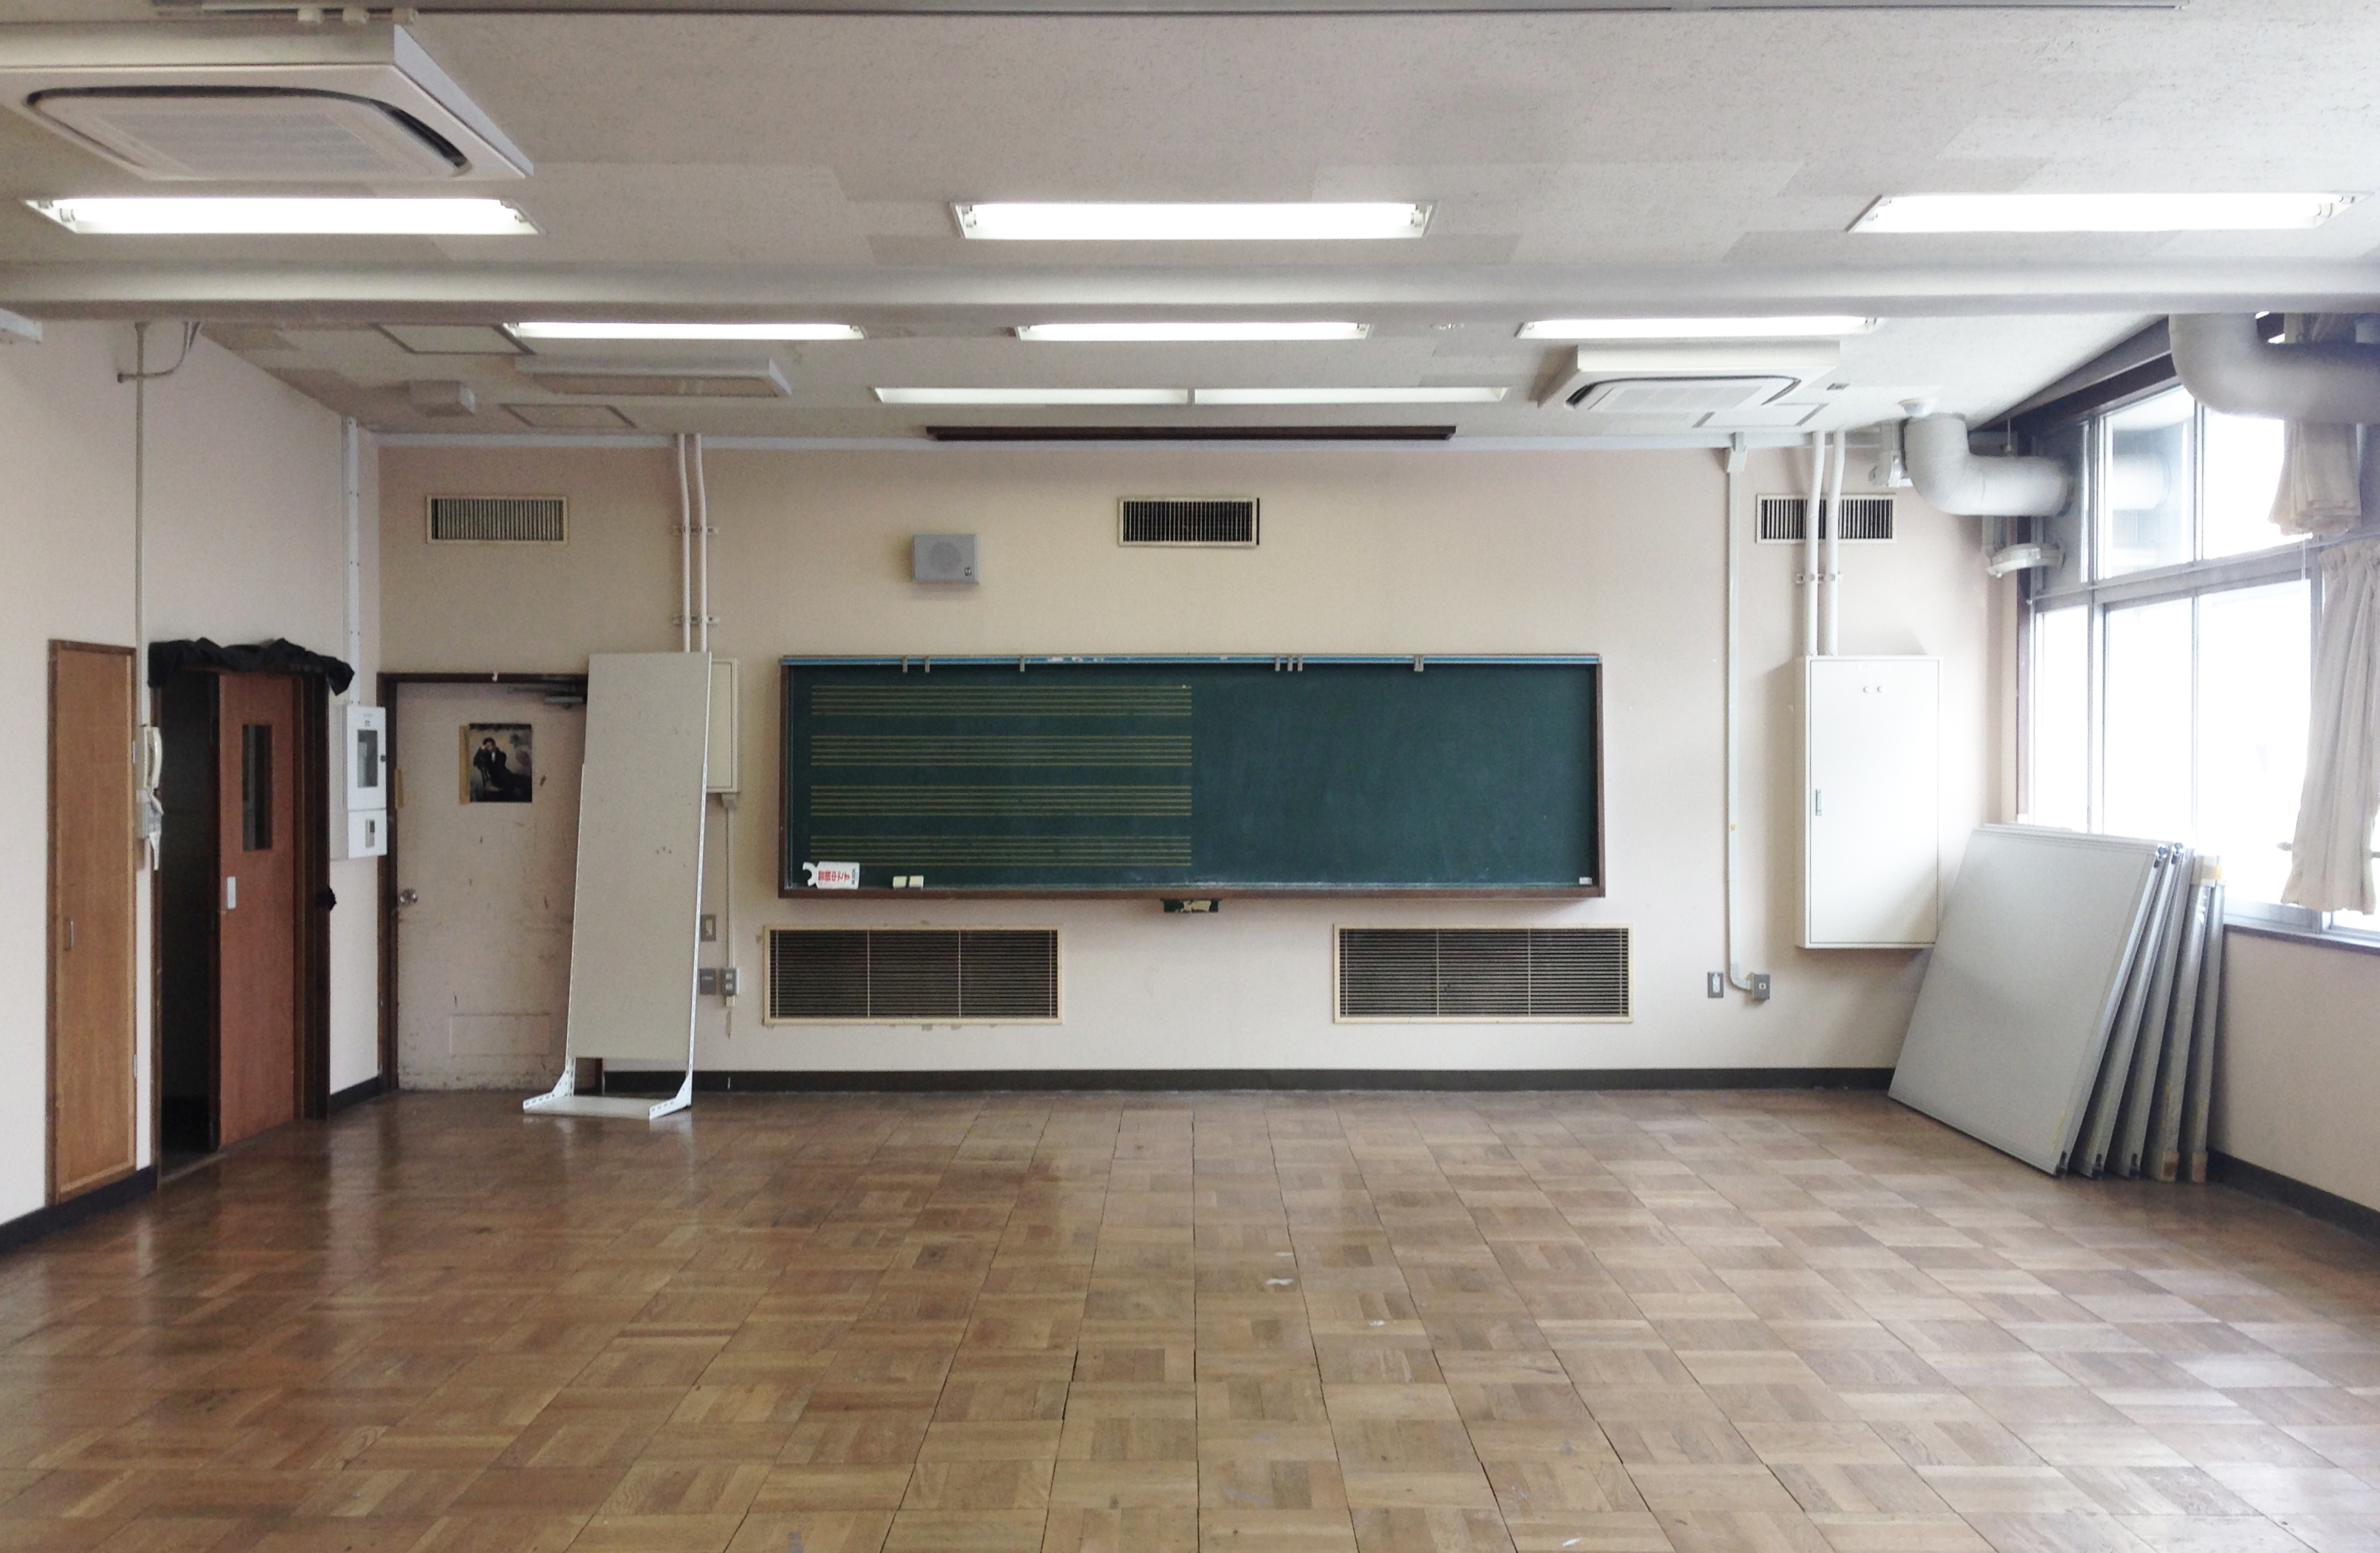 studio mufufuの事務所は大田区の廃校になった小学校のなかに。元音楽室だそう。